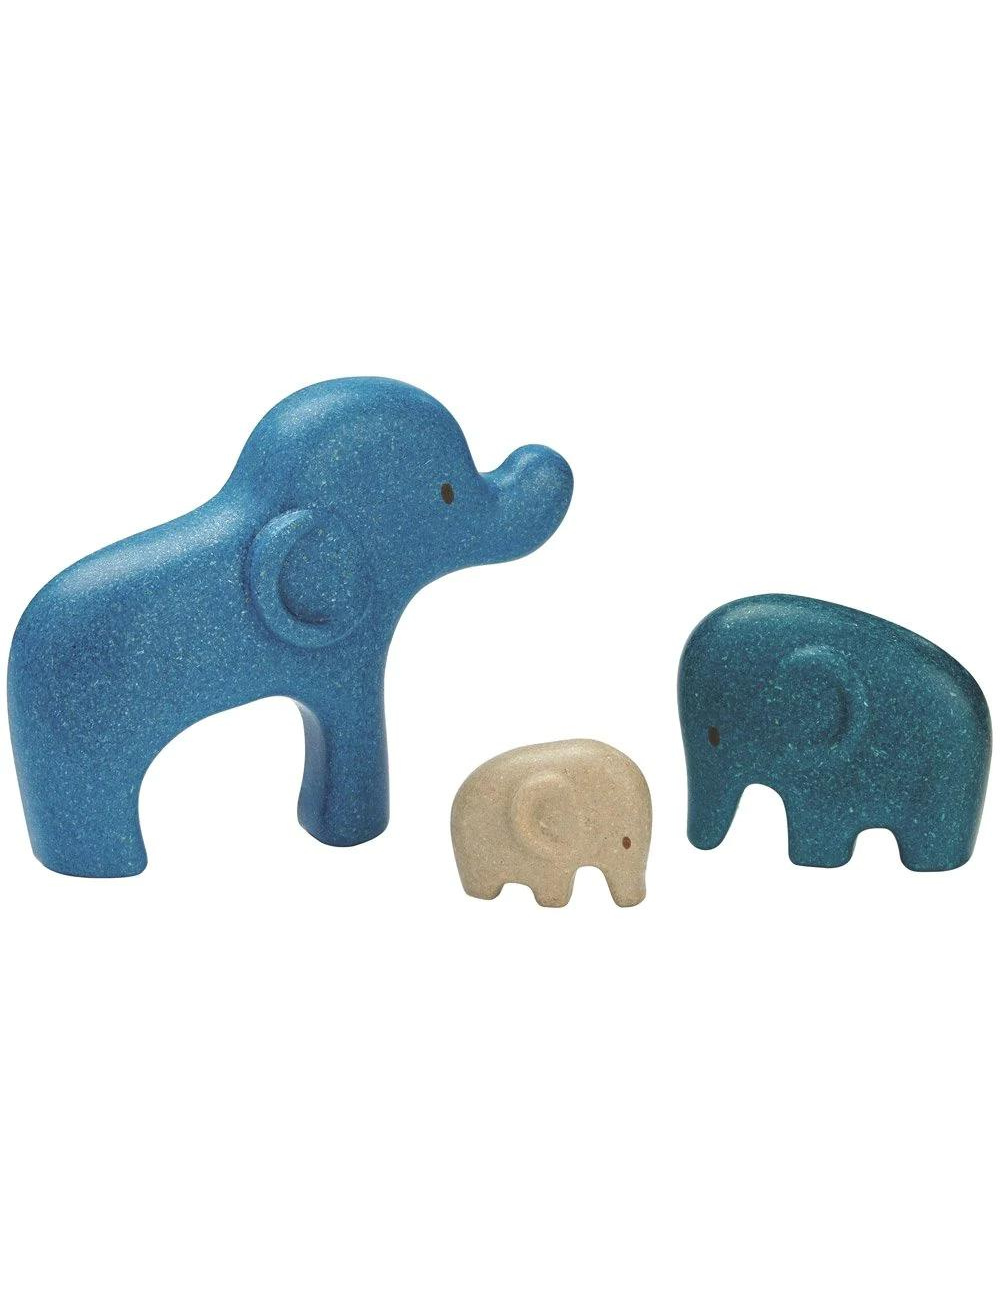 The Plan Toys Elephant Puzzle